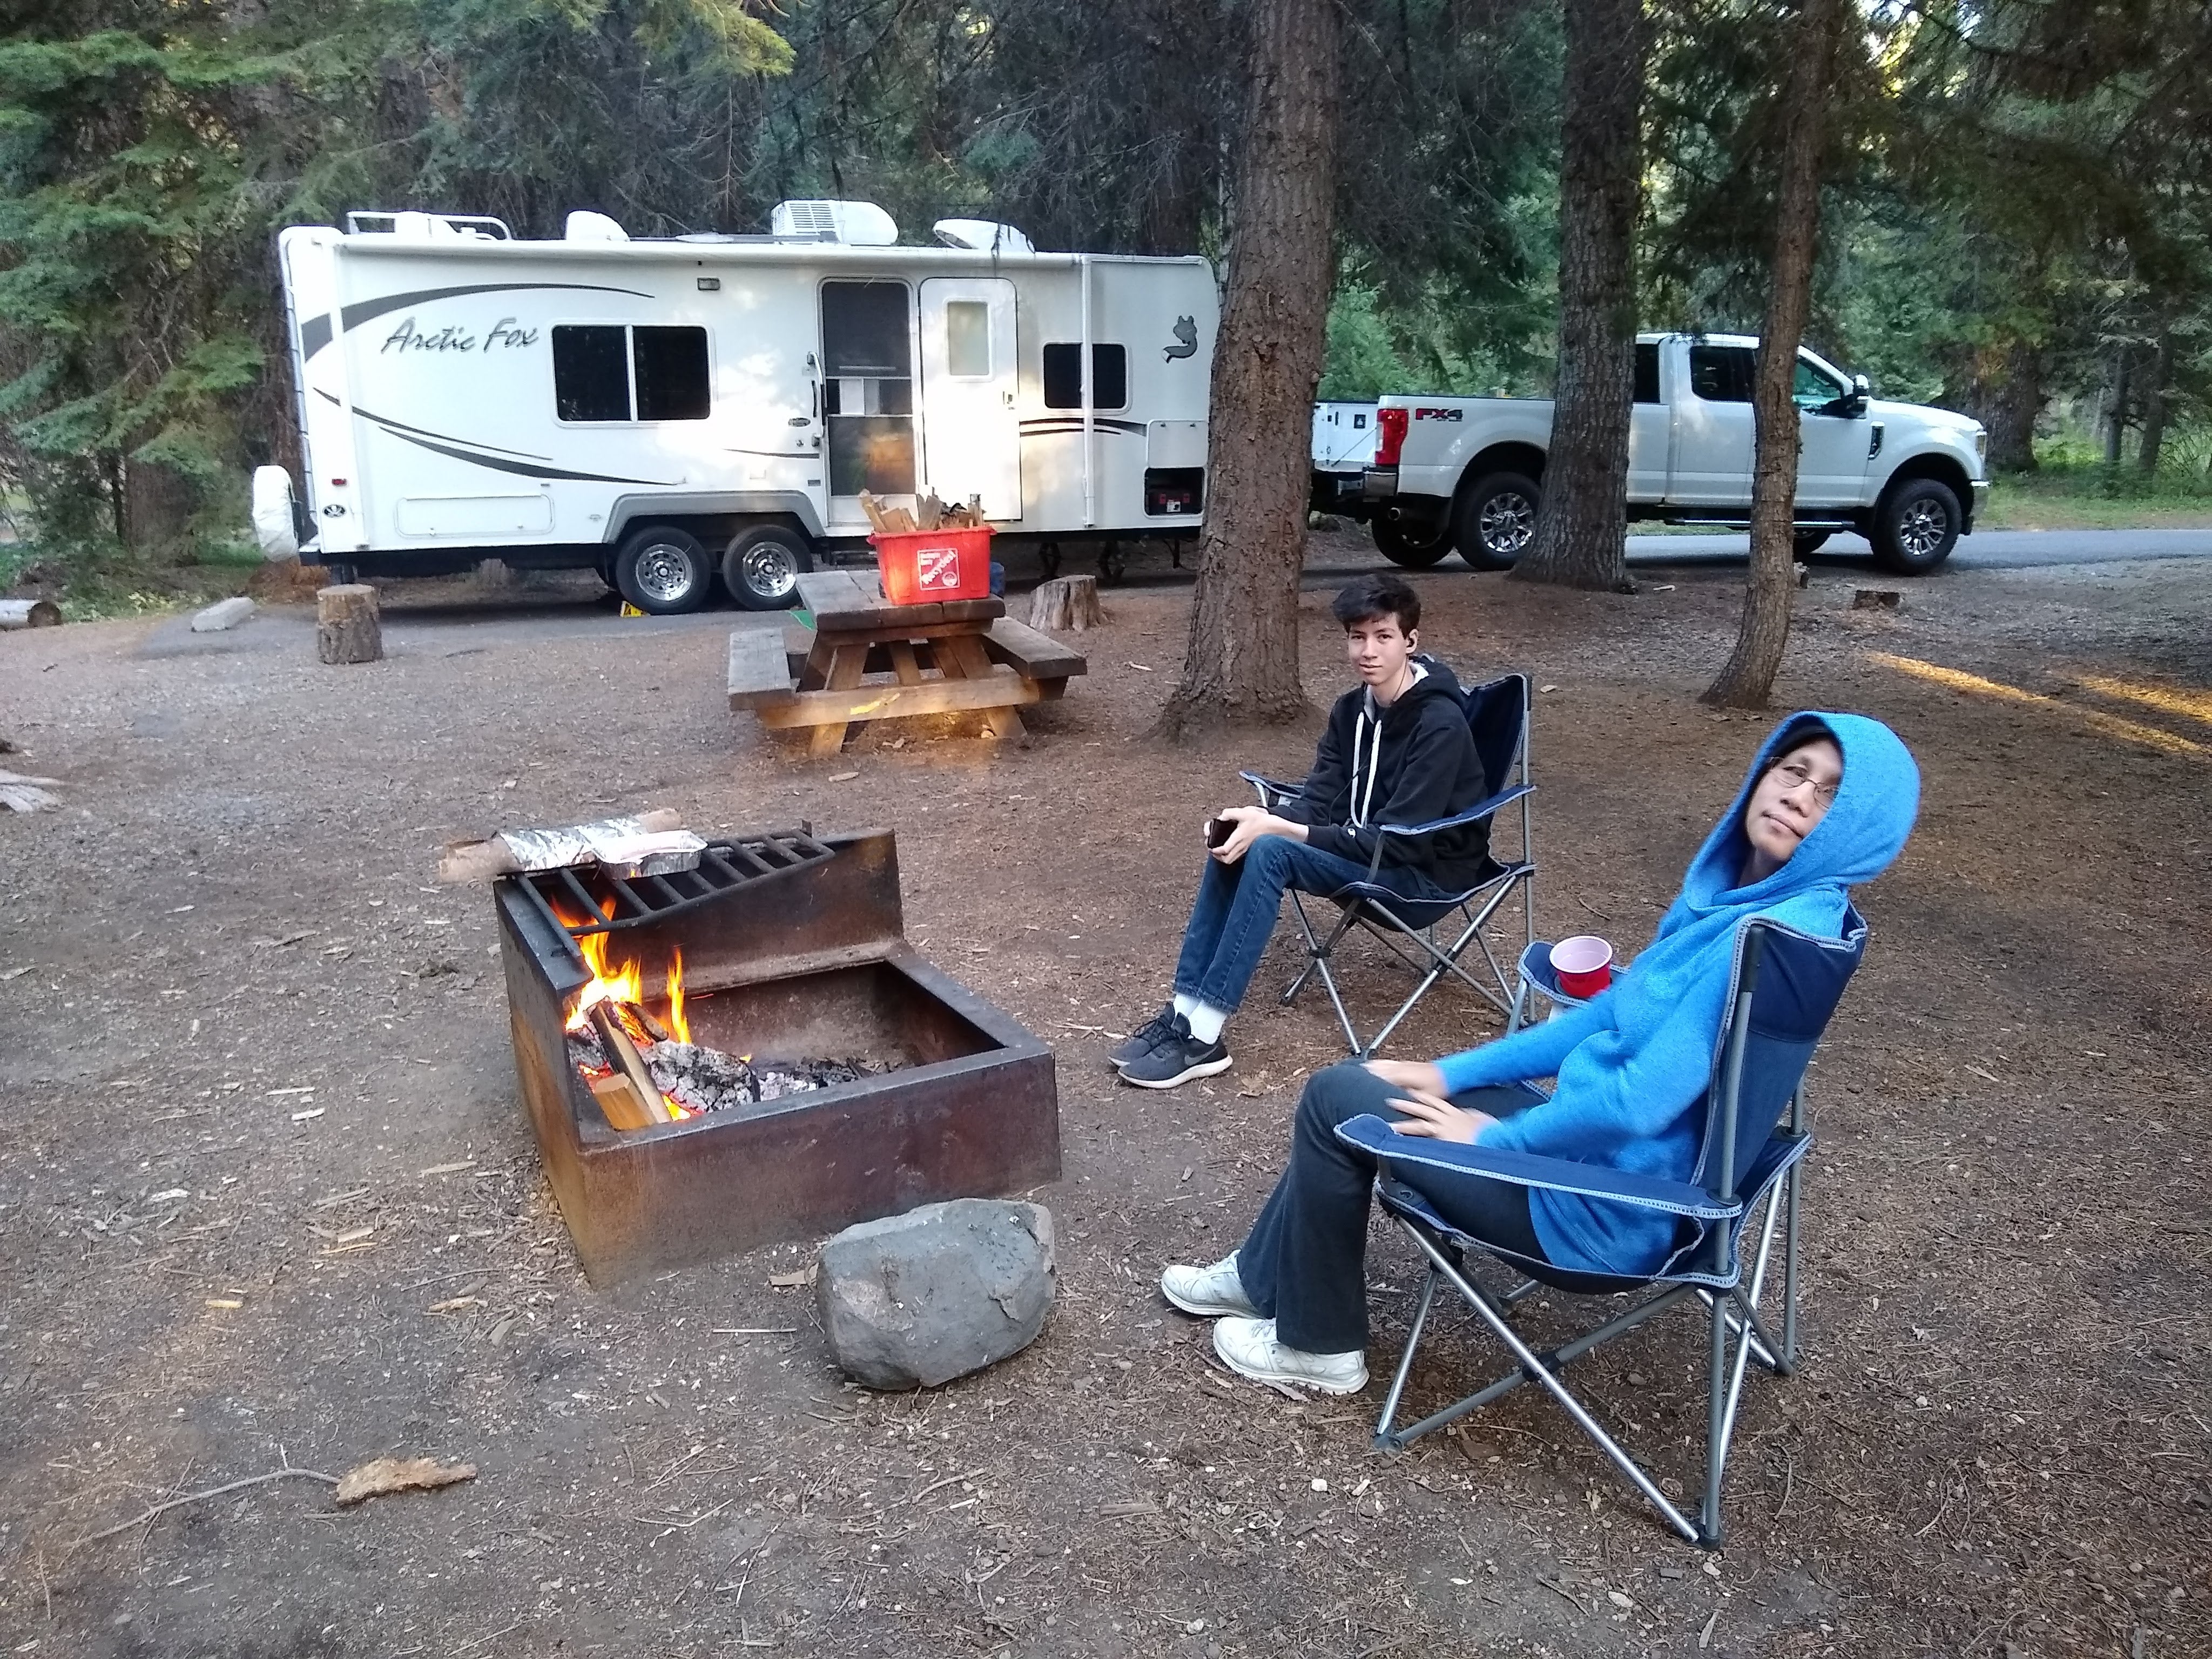 Our spacious campsite A5